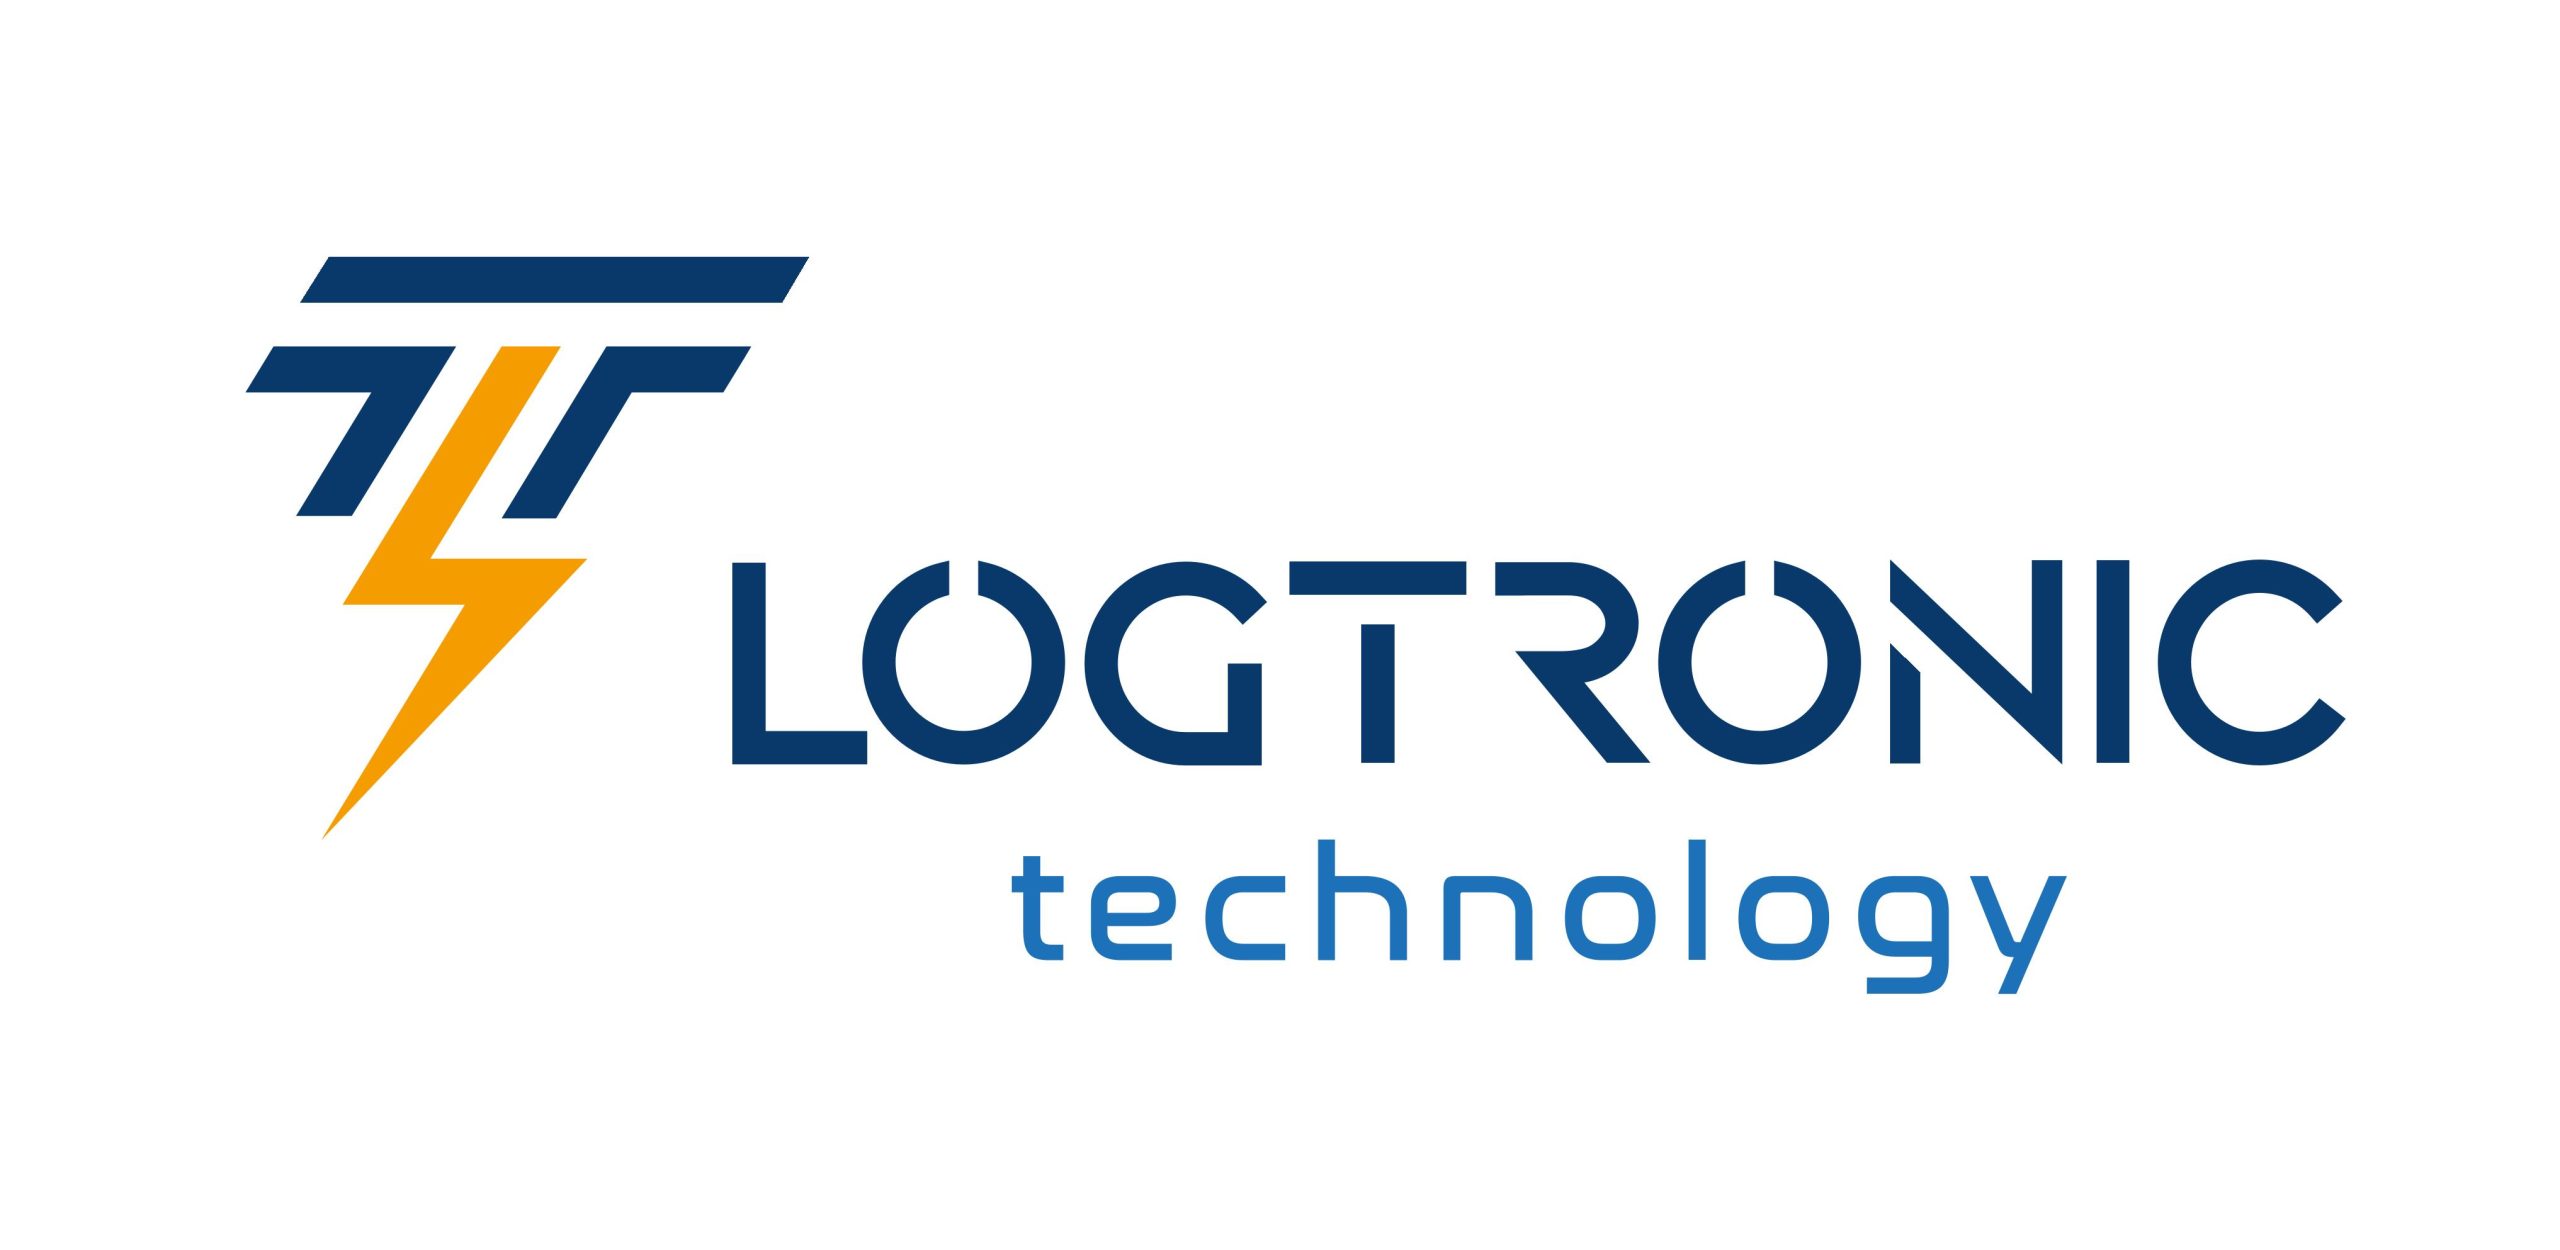 Logotipo - Logtronic Tecnologia Industrial